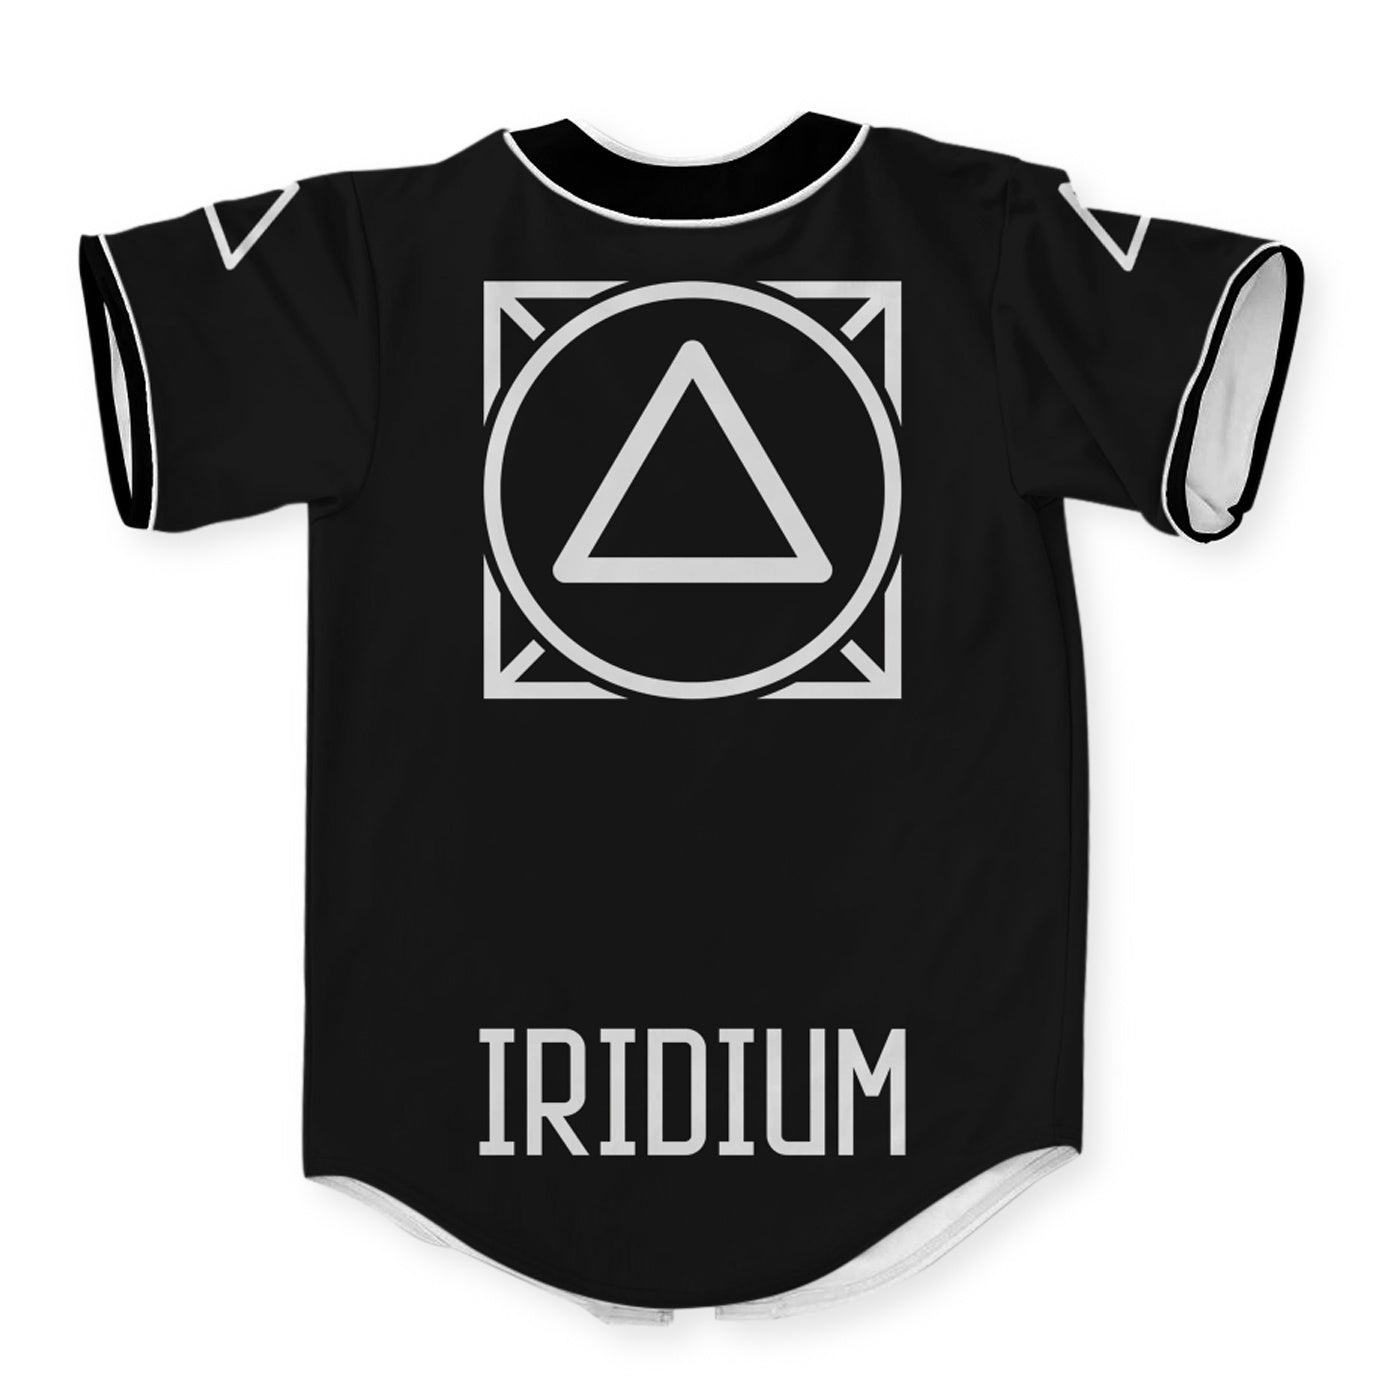 Iridium Jersey